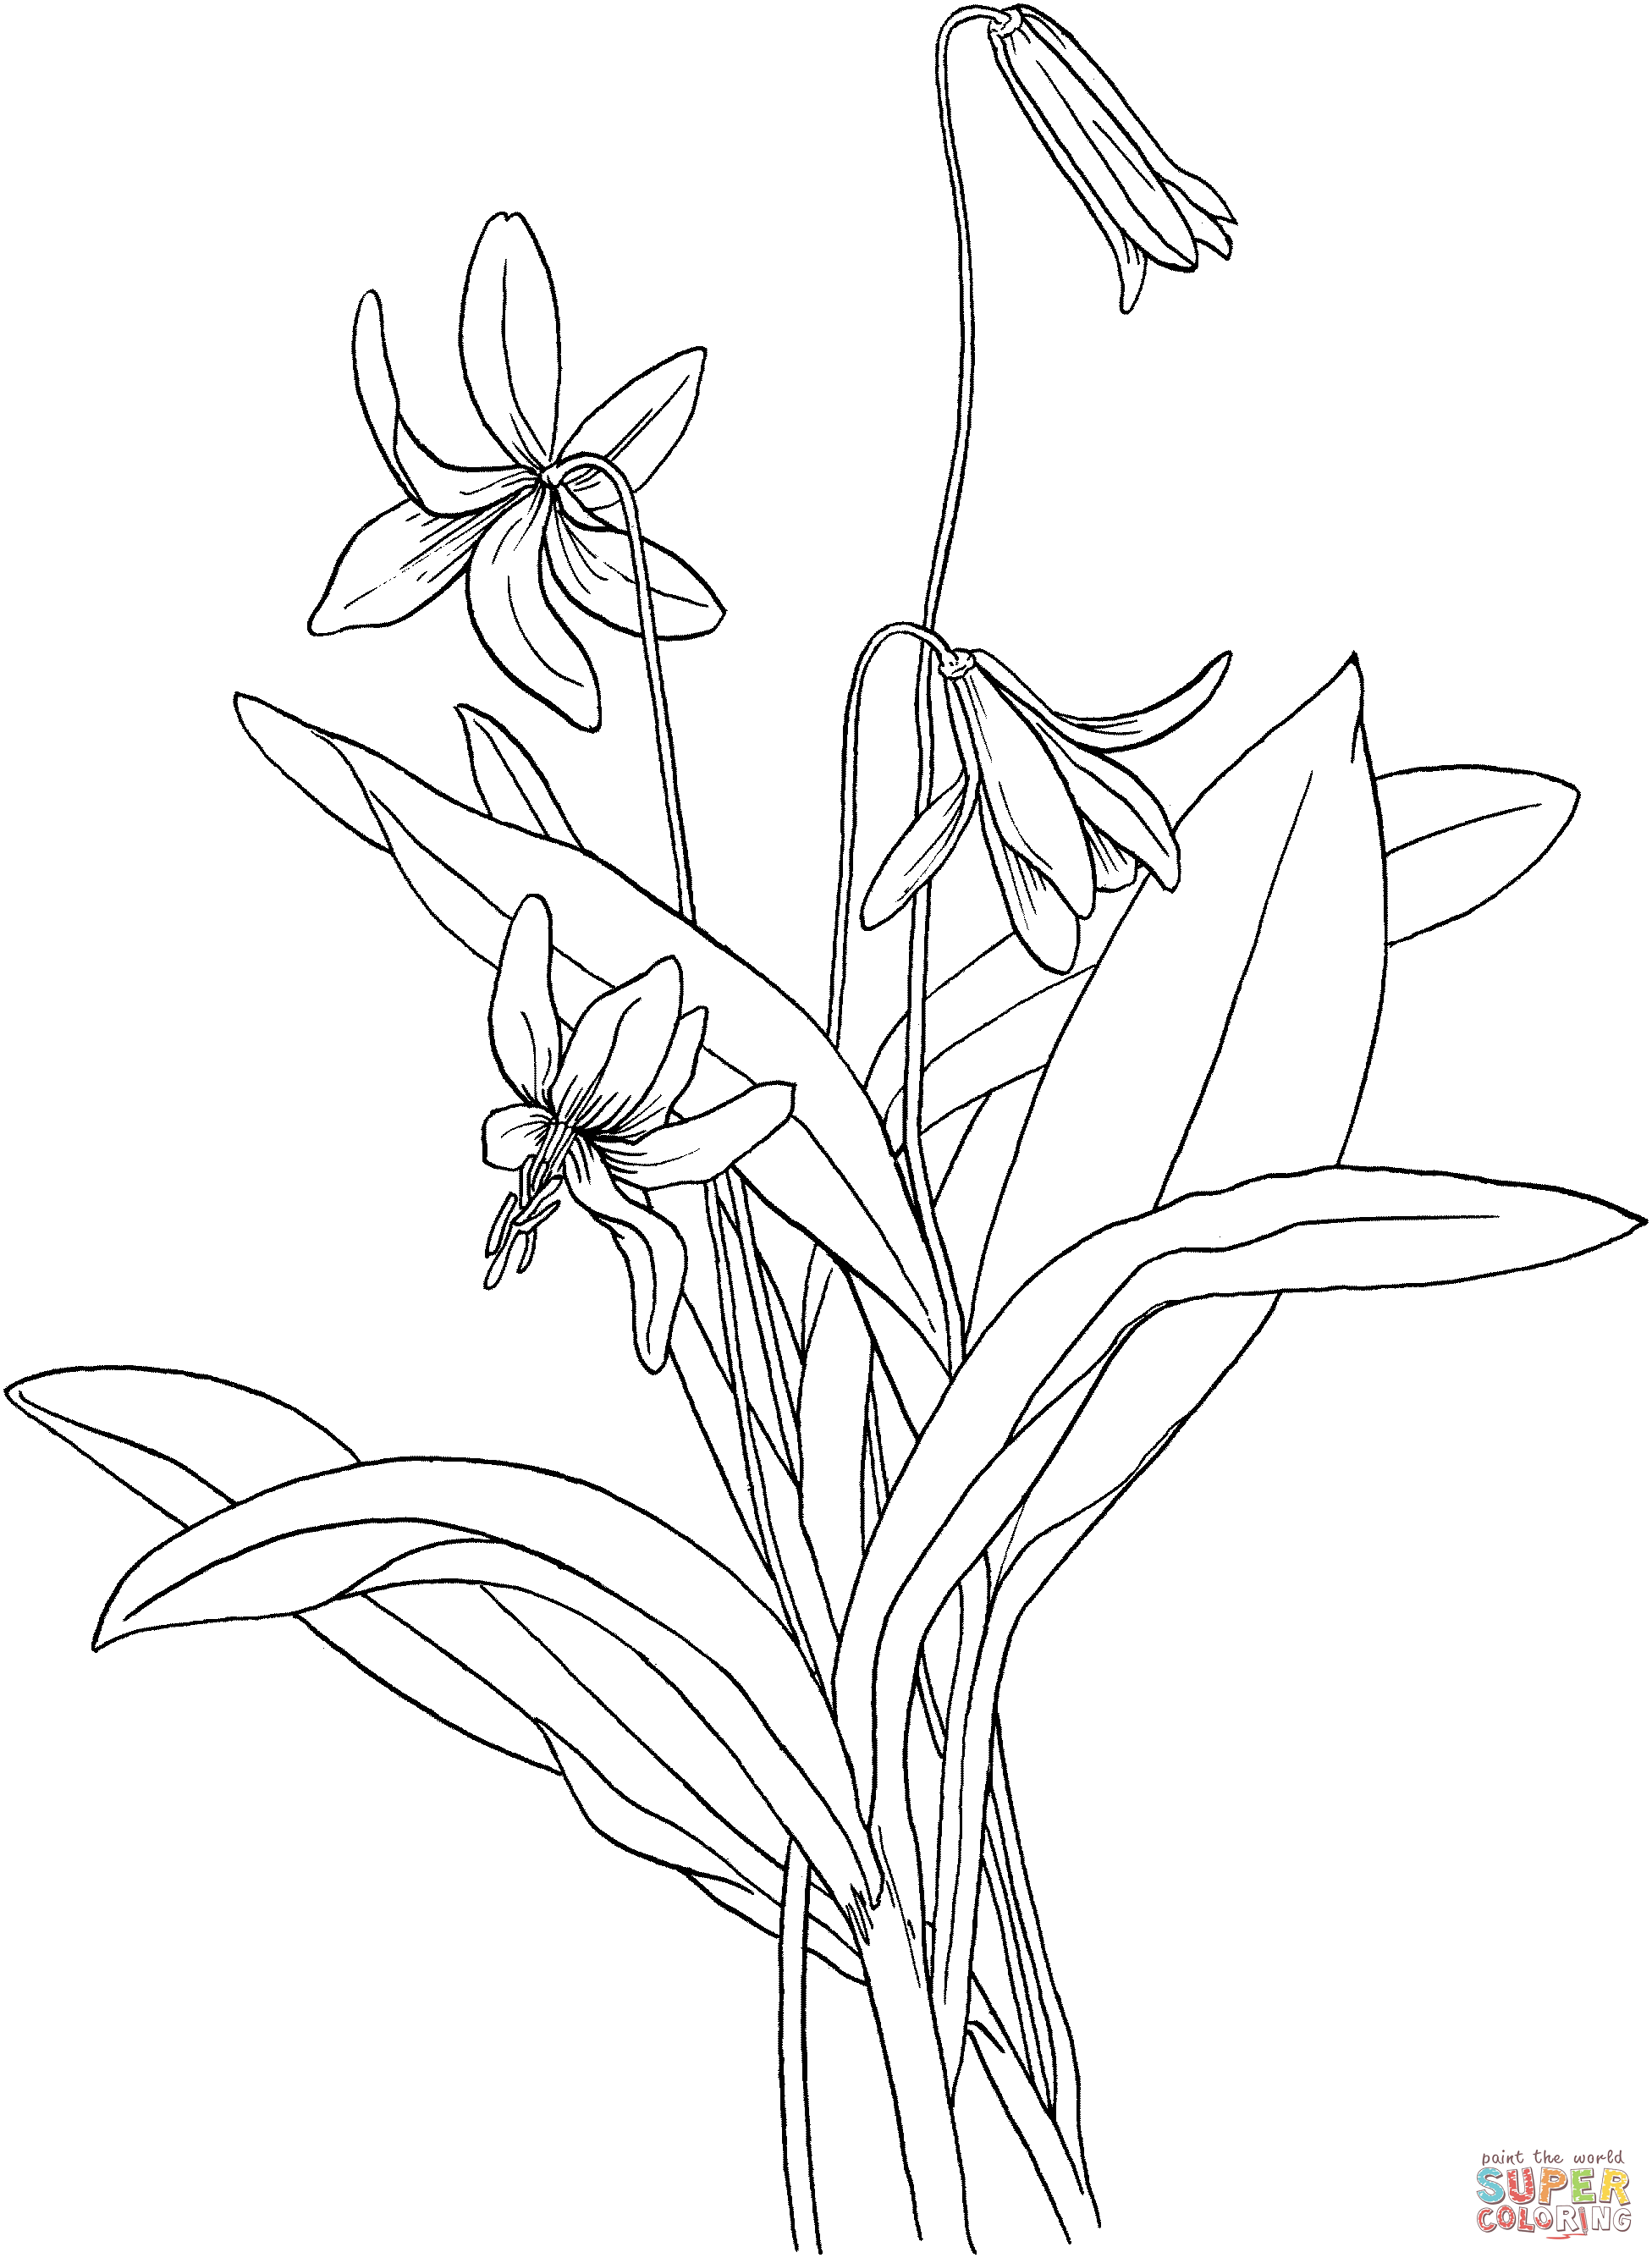 Erythronium Americanum o Giglio di trota dai gigli